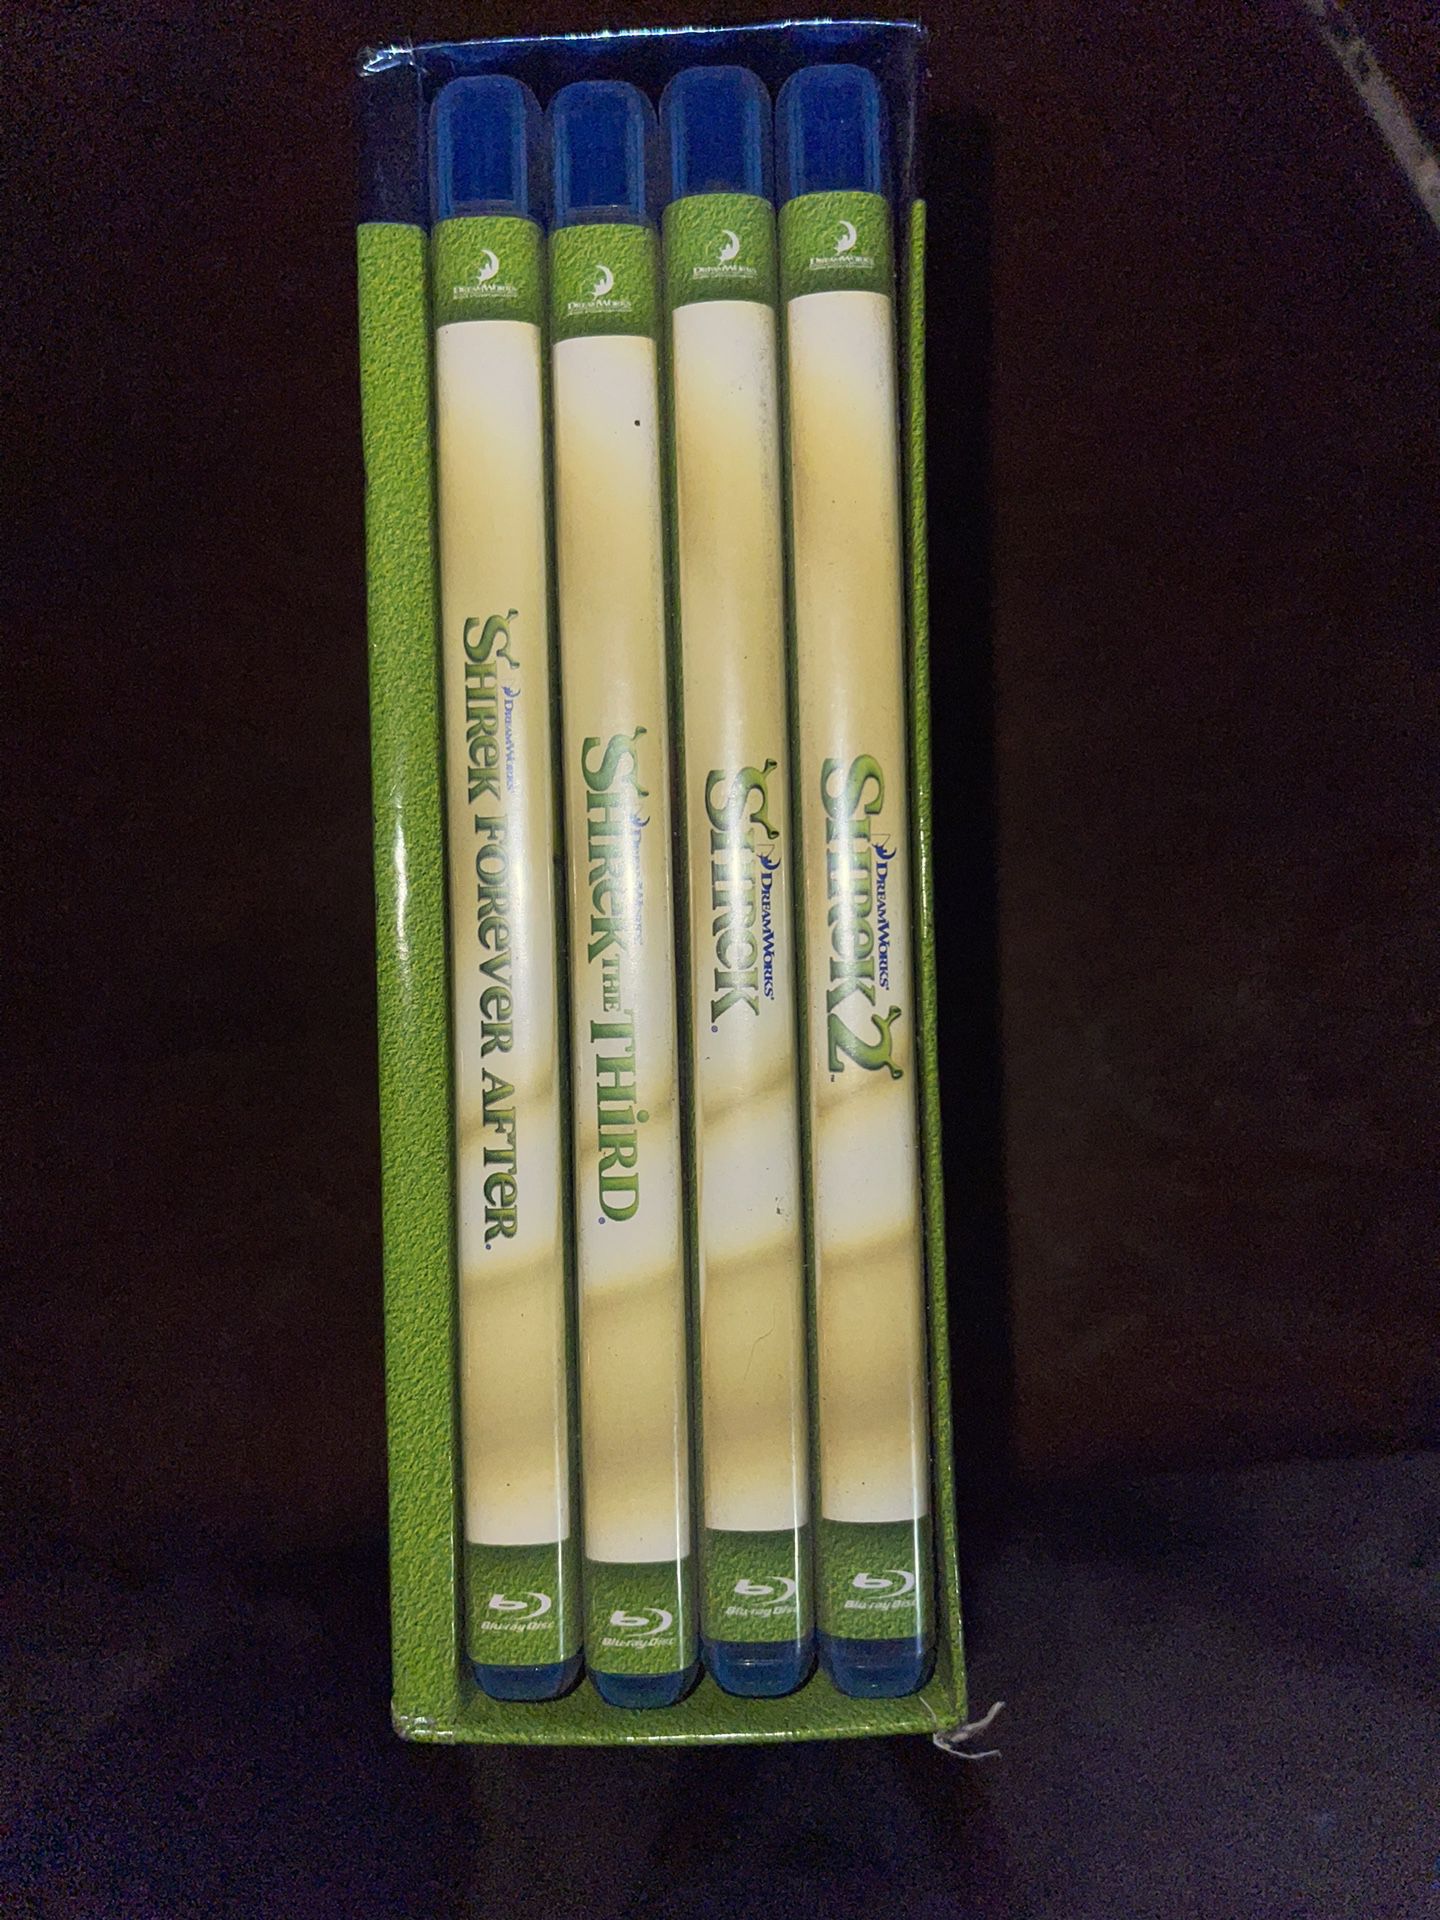 Shrek Blu Ray Collection 